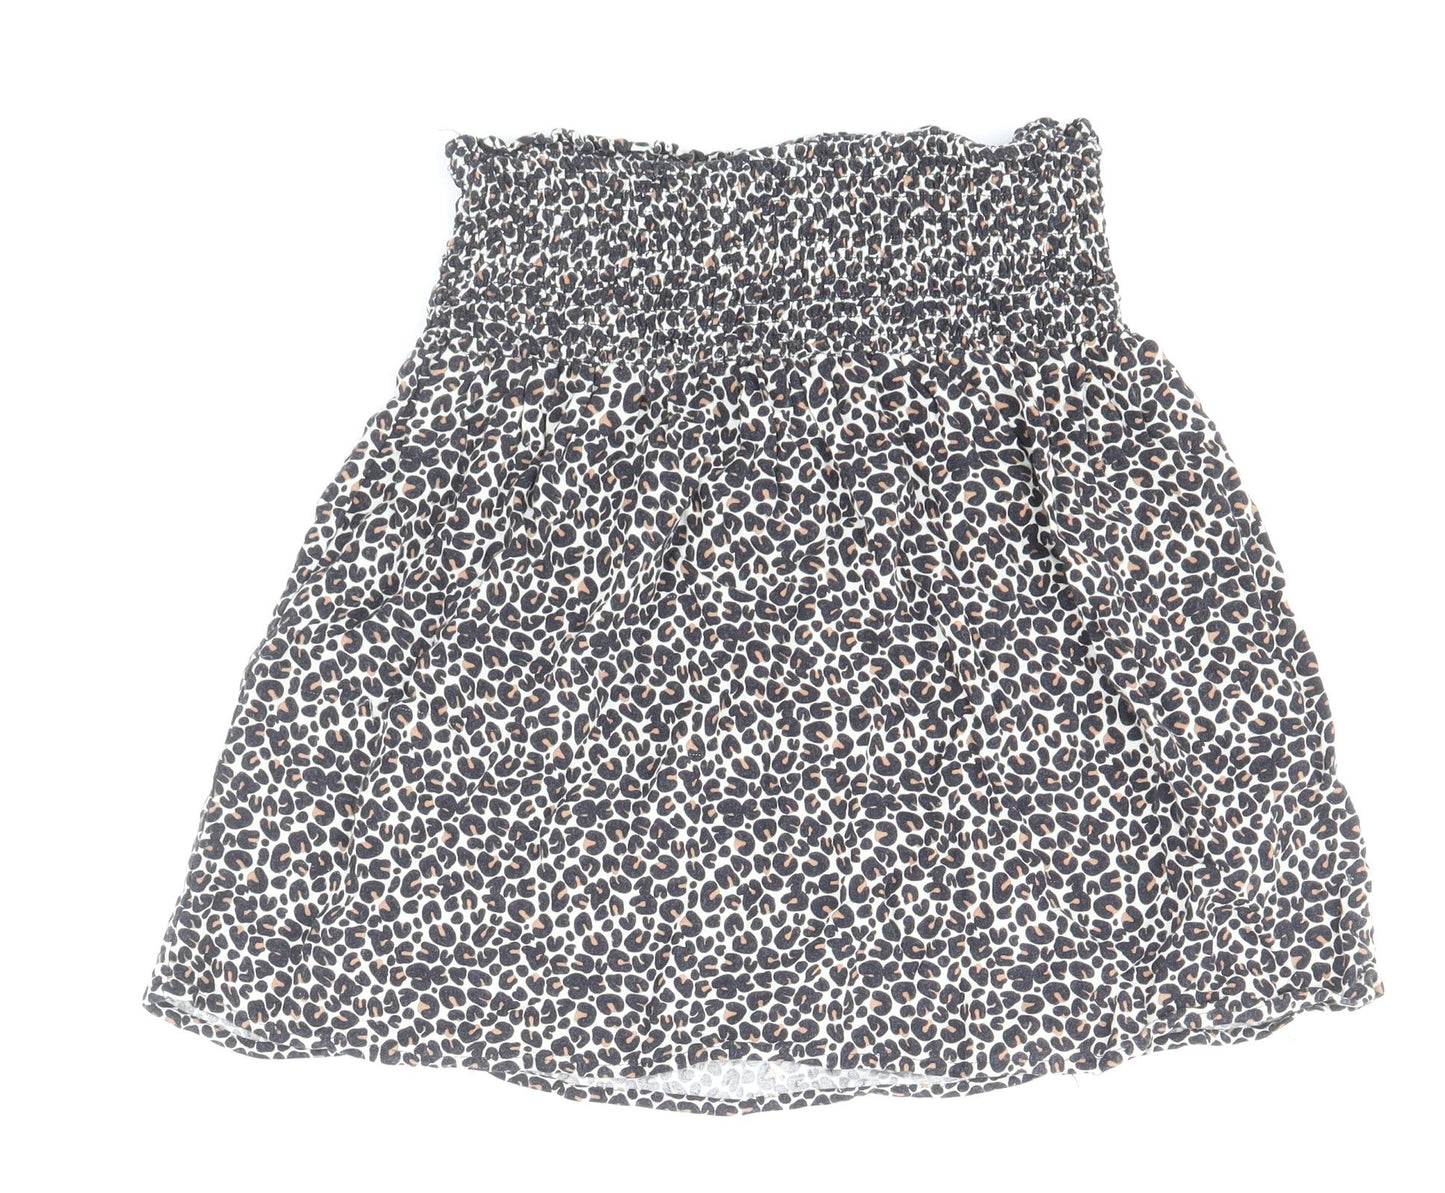 Primark Girls Brown Animal Print Viscose A-Line Skirt Size 12-13 Years Regular Pull On - Leopard Print